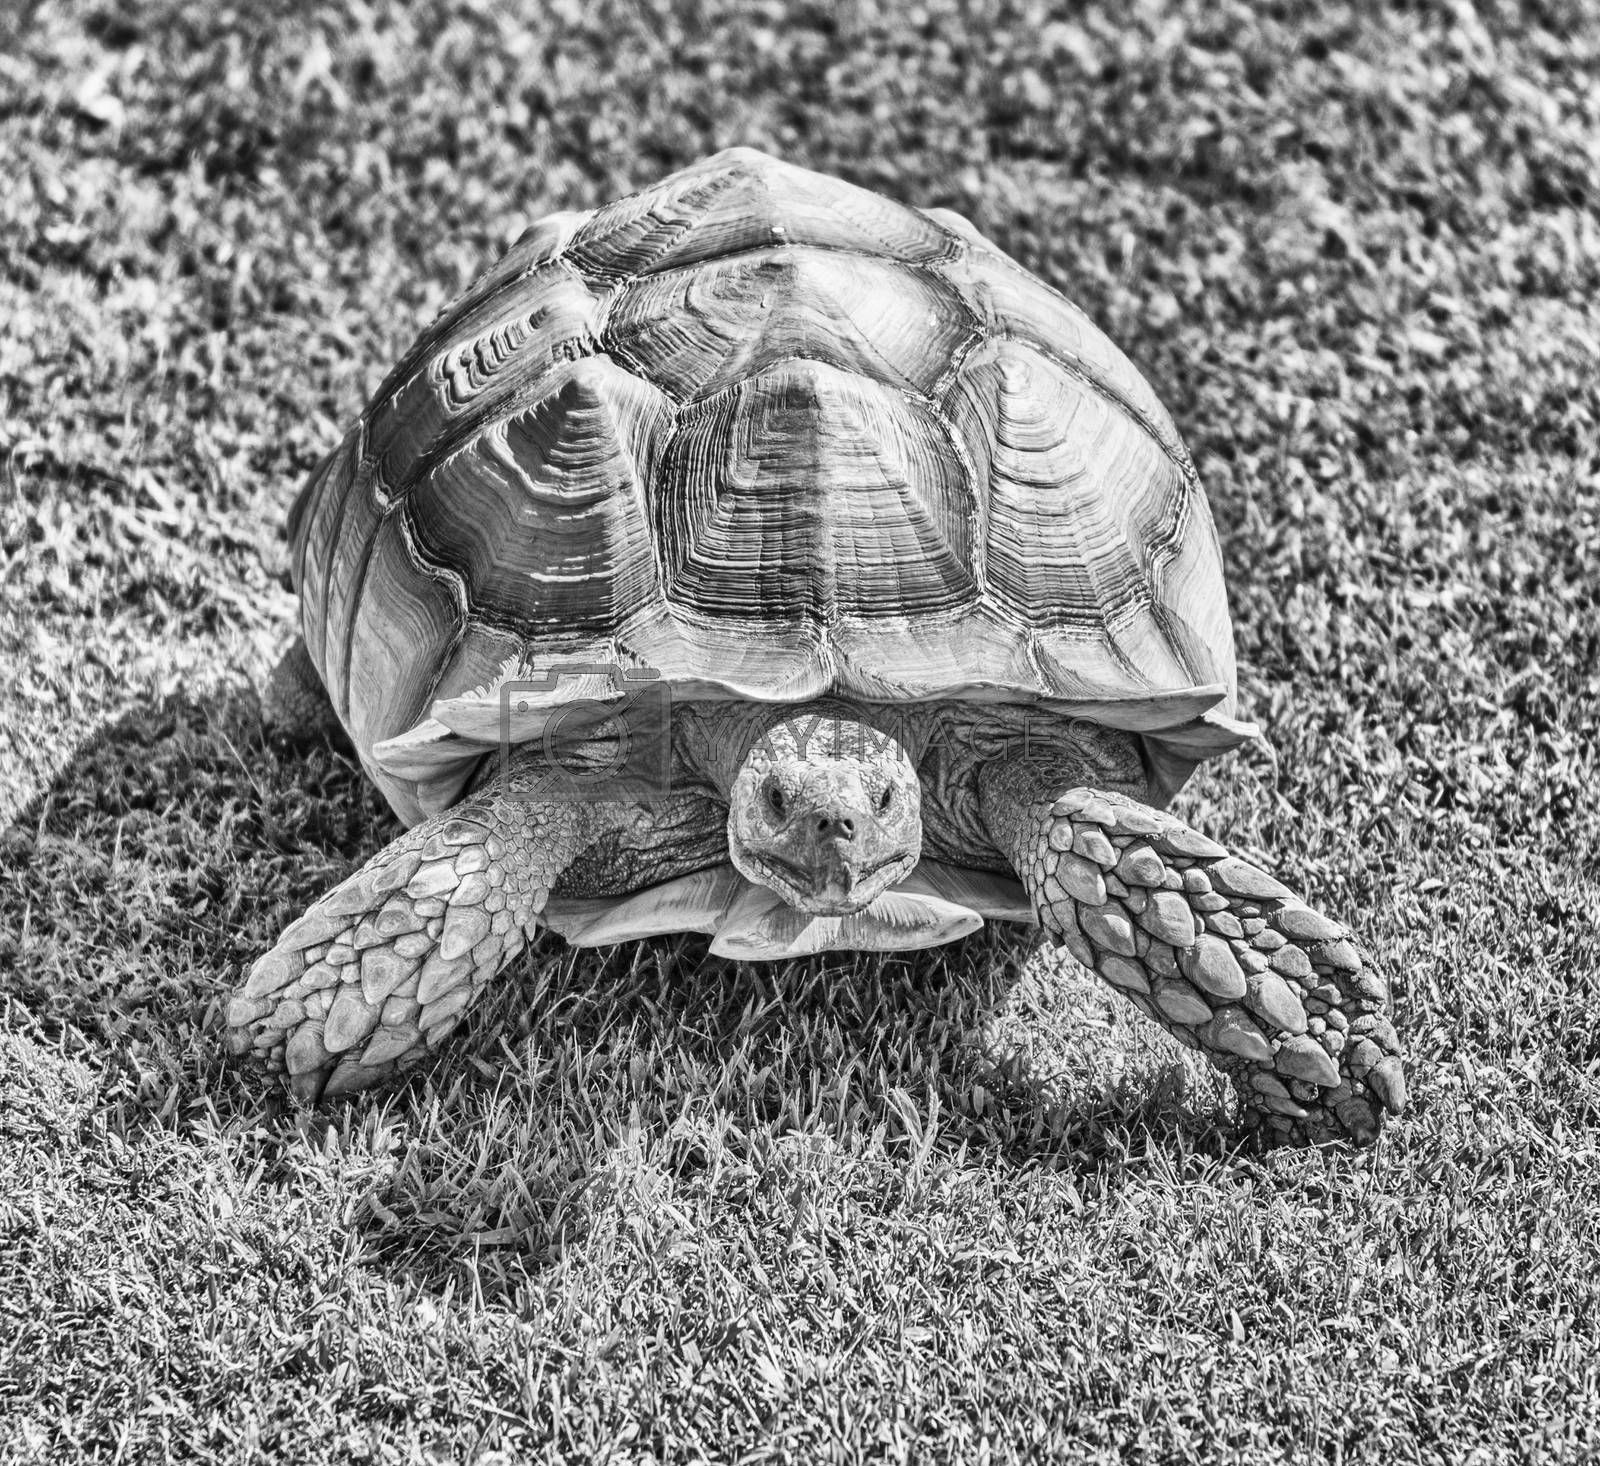 Royalty free image of African spurred tortoise aka sulcata tortoise walking on the gra by marcorubino